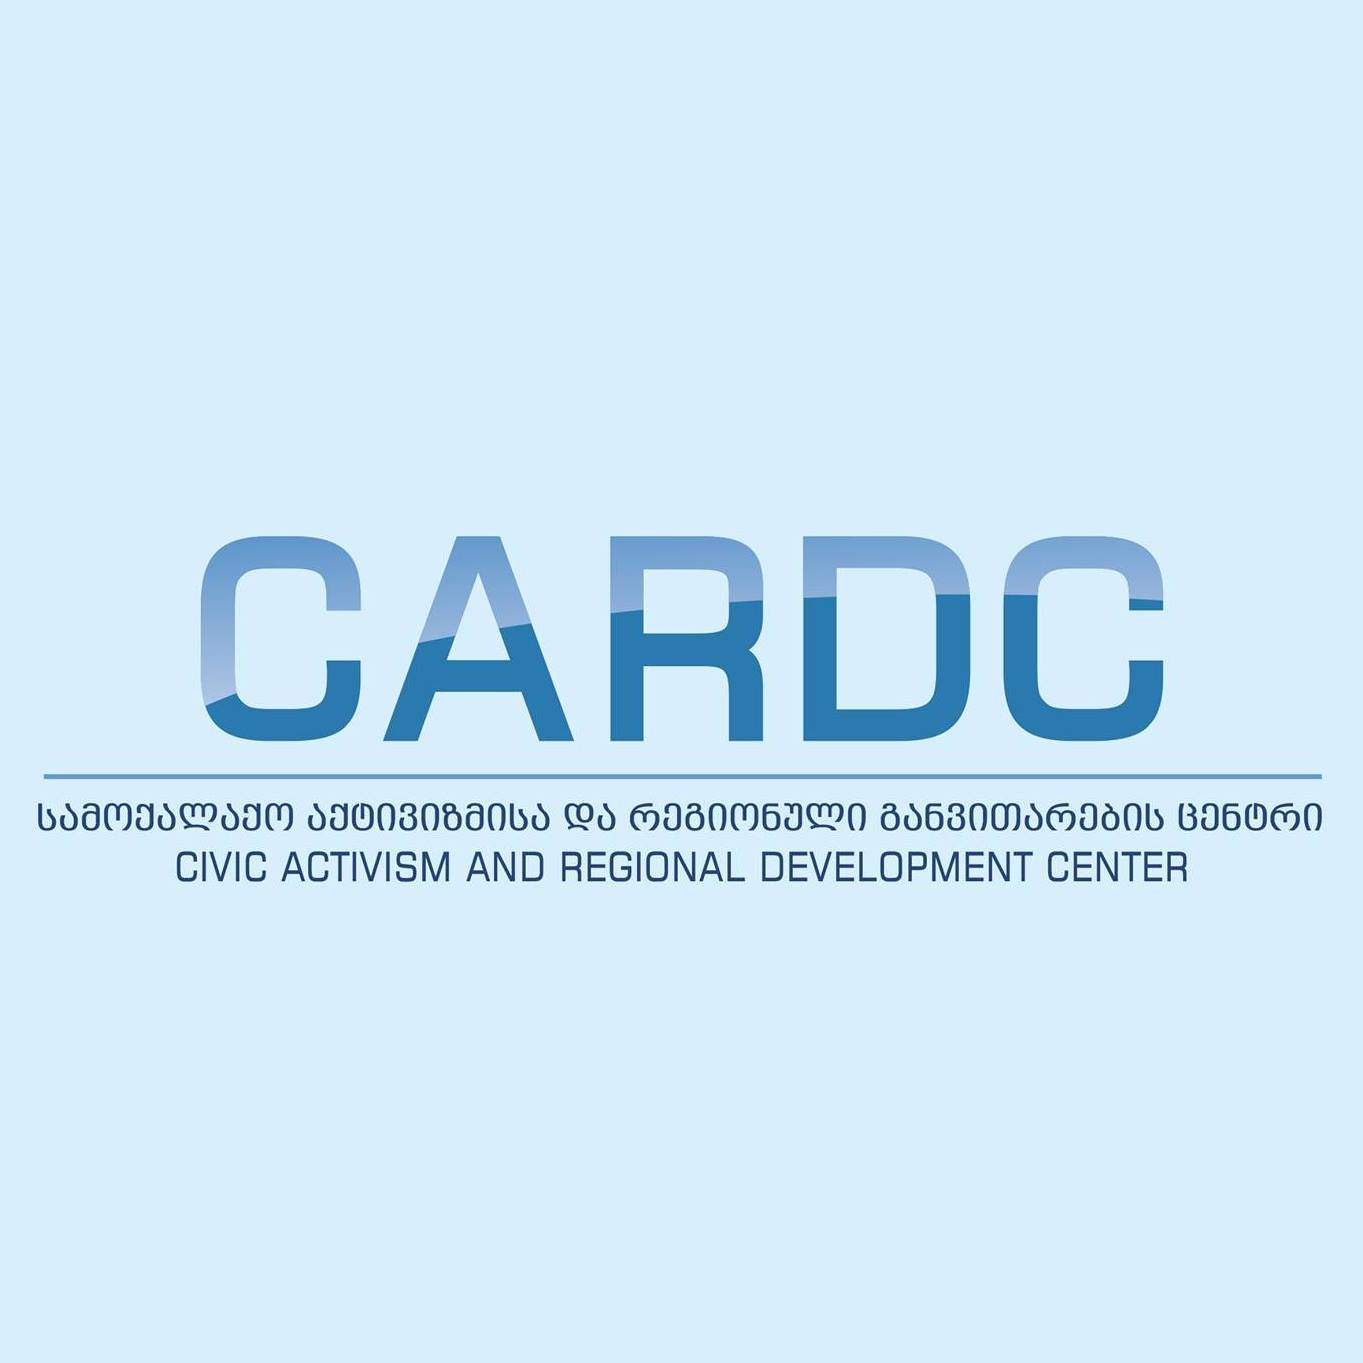 Civic Activism and Regional Development Center (CARDC)